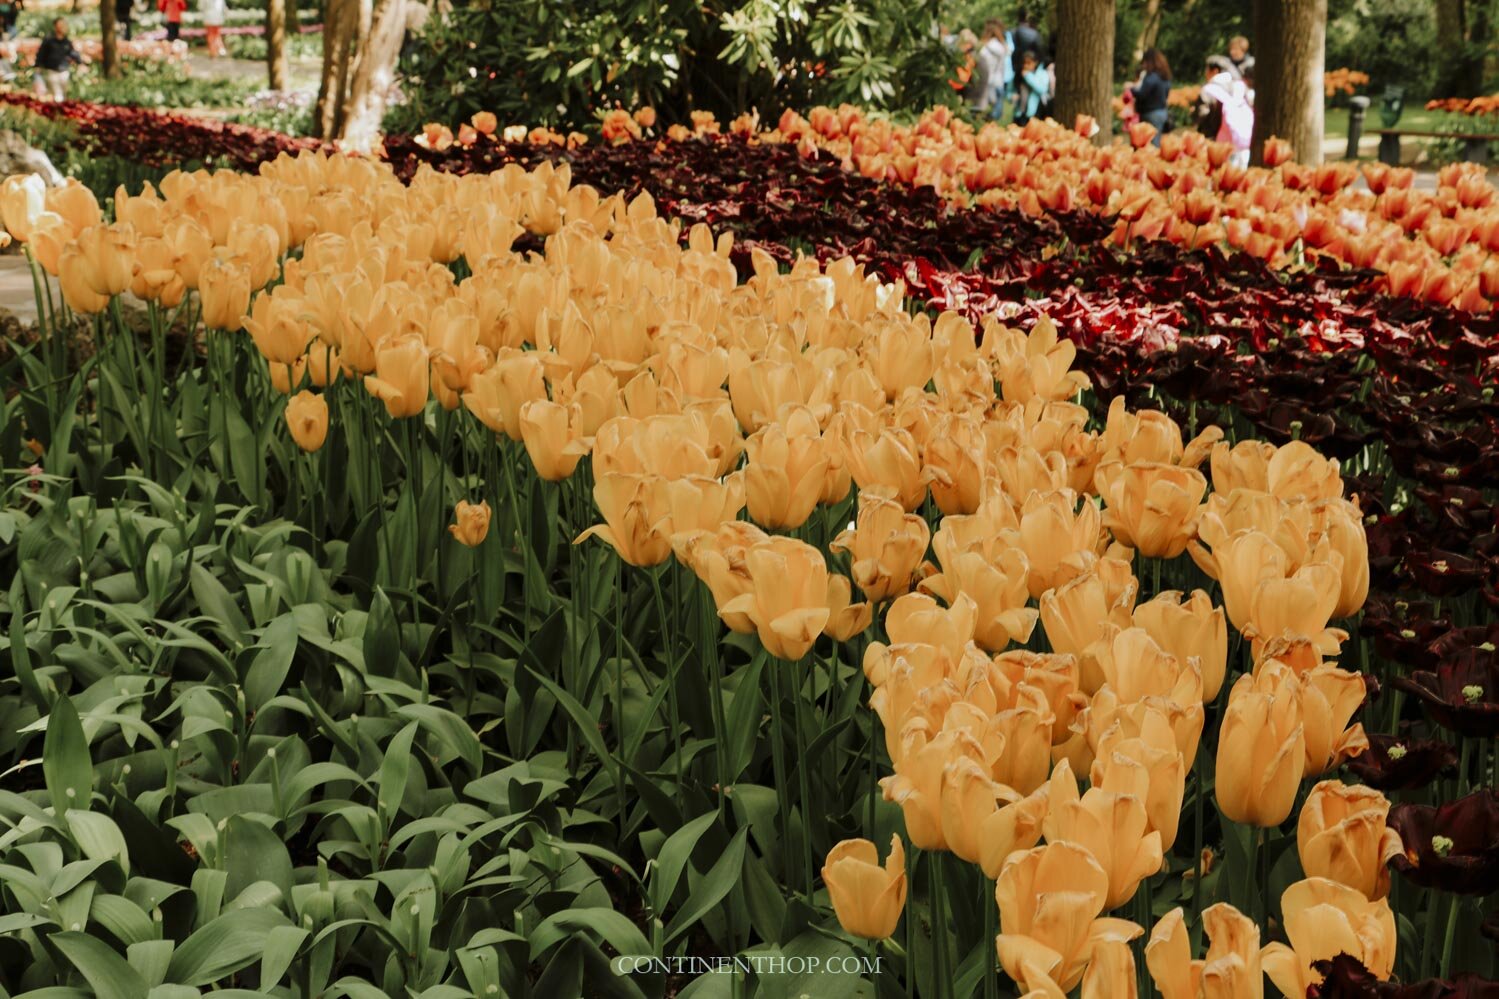 Tulips arranged in rows at the Keukenhof for the Amsterdam tulip flower festival